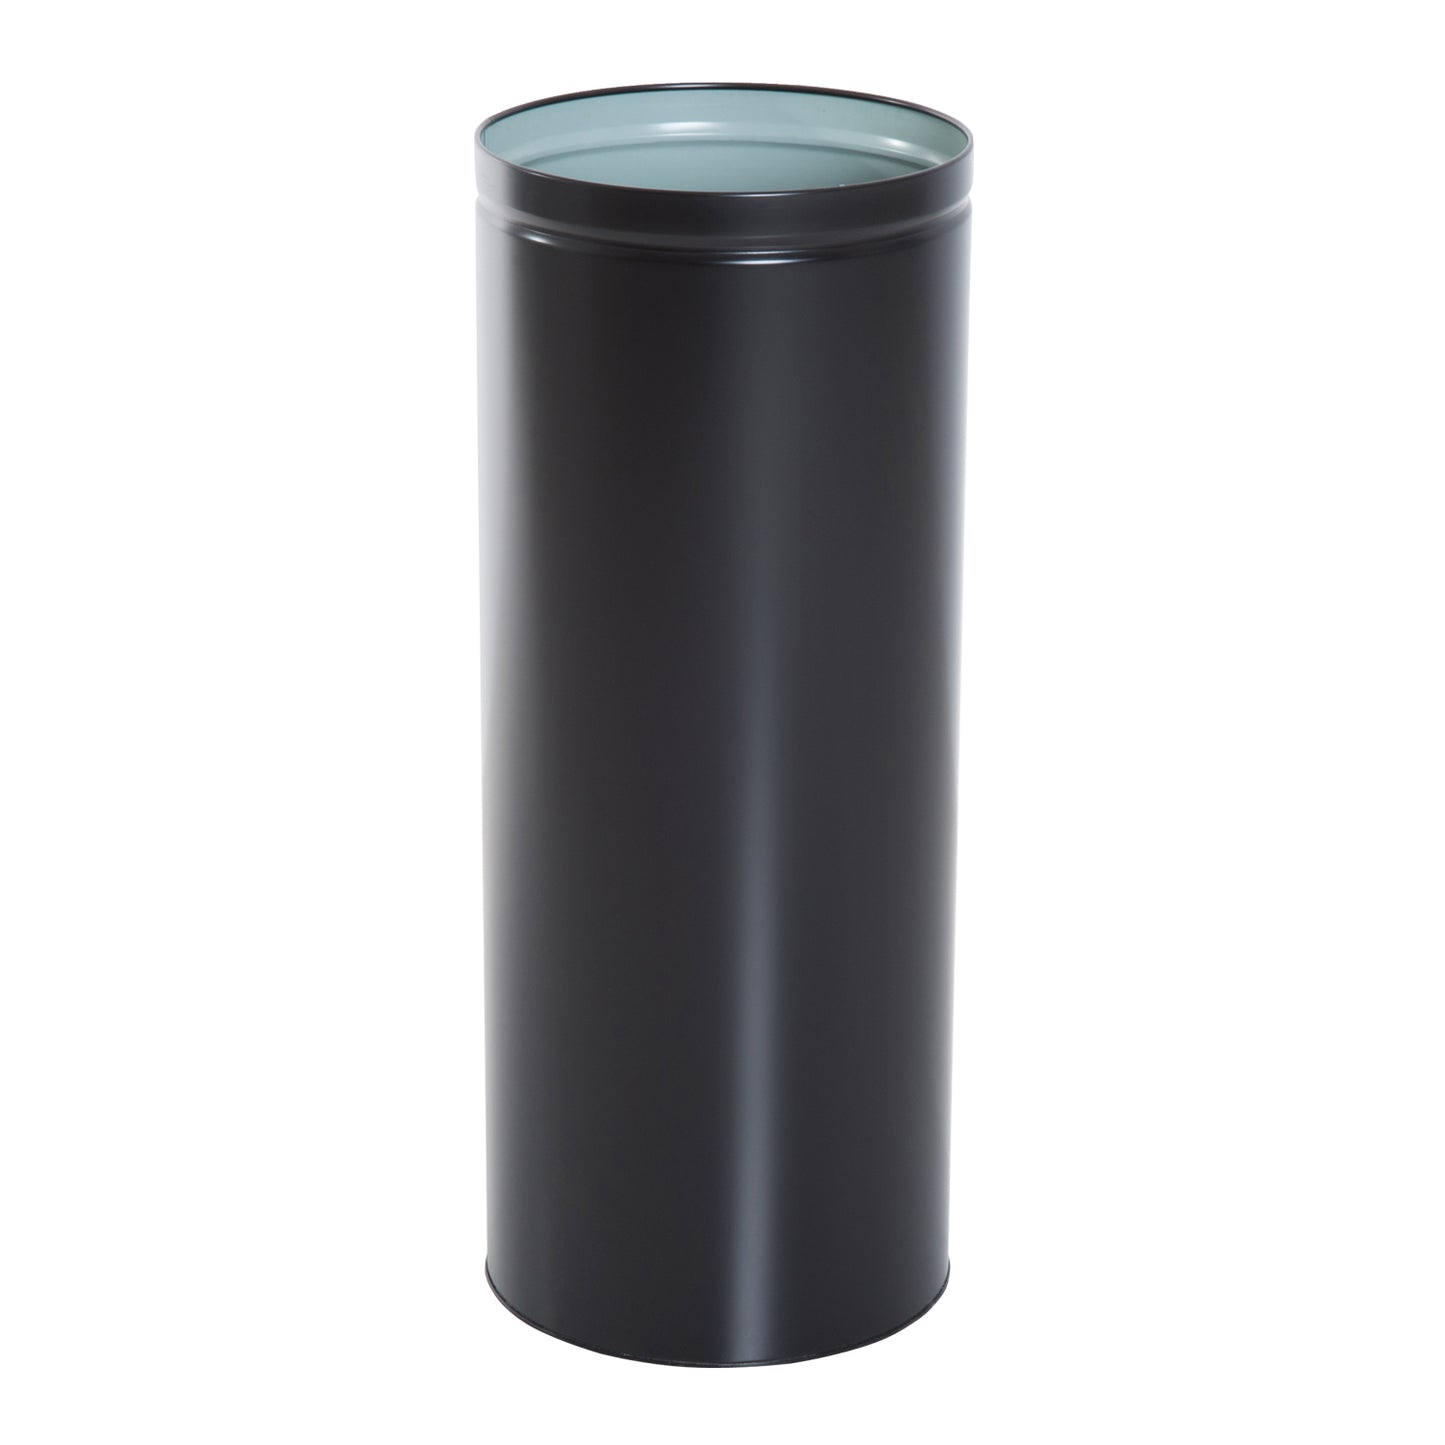 HOMCOM 50 L Stainless Steel Sensor Trash Can W/ Bucket-Black